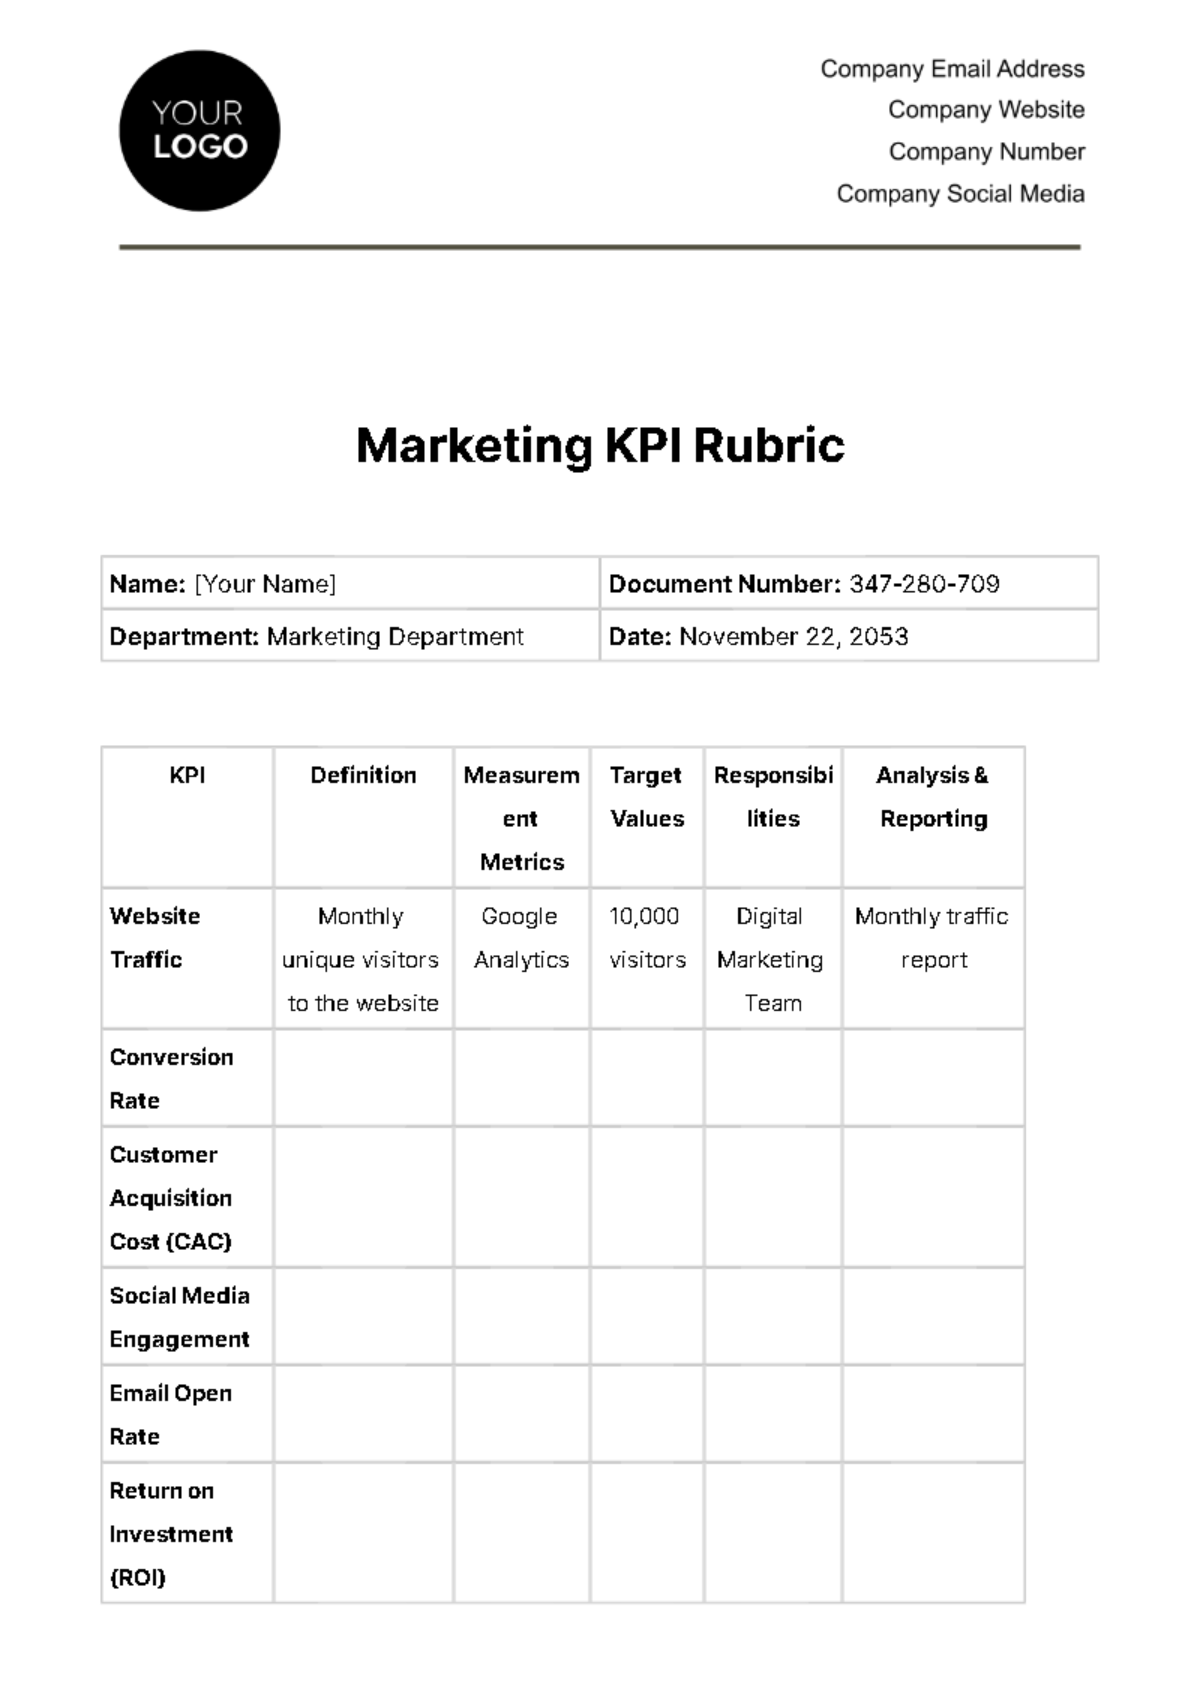 Marketing KPI Rubric Template